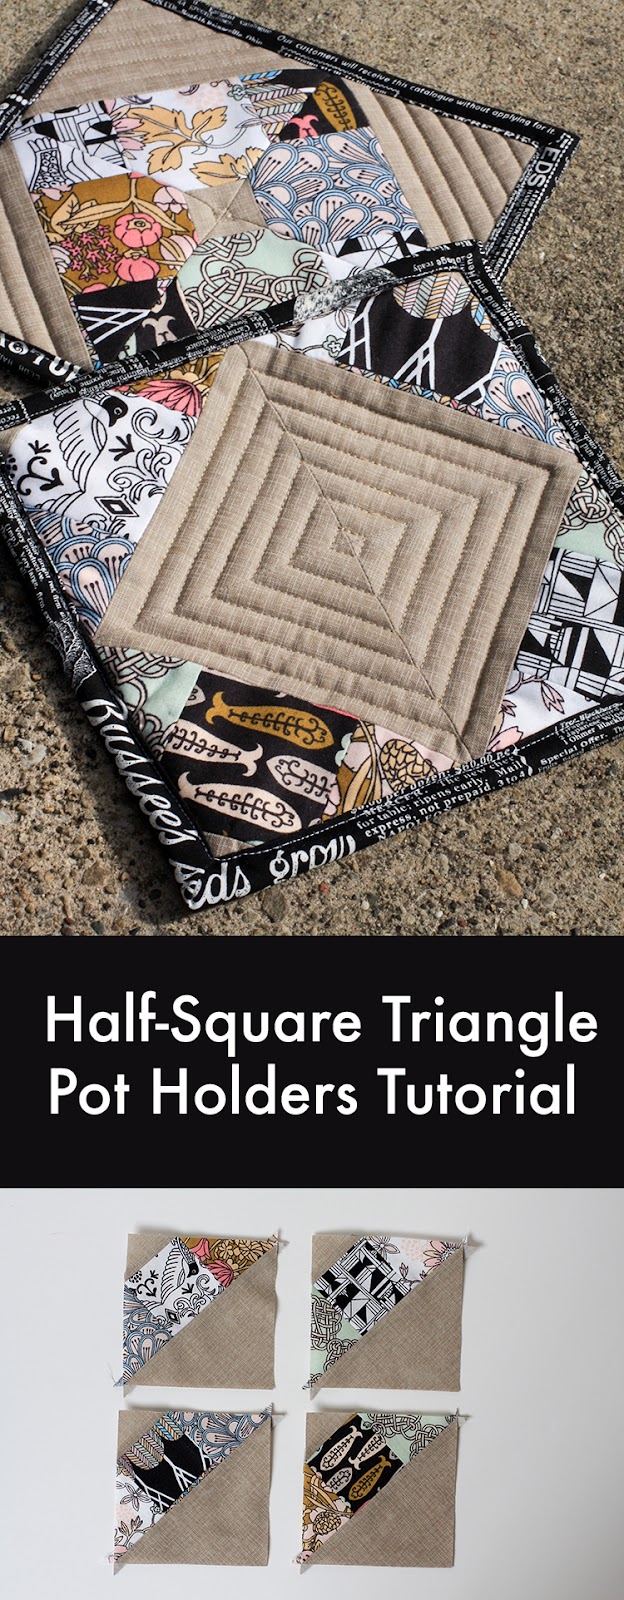 In Color Order: Half-Square Triangle Pot Holders Tutorial